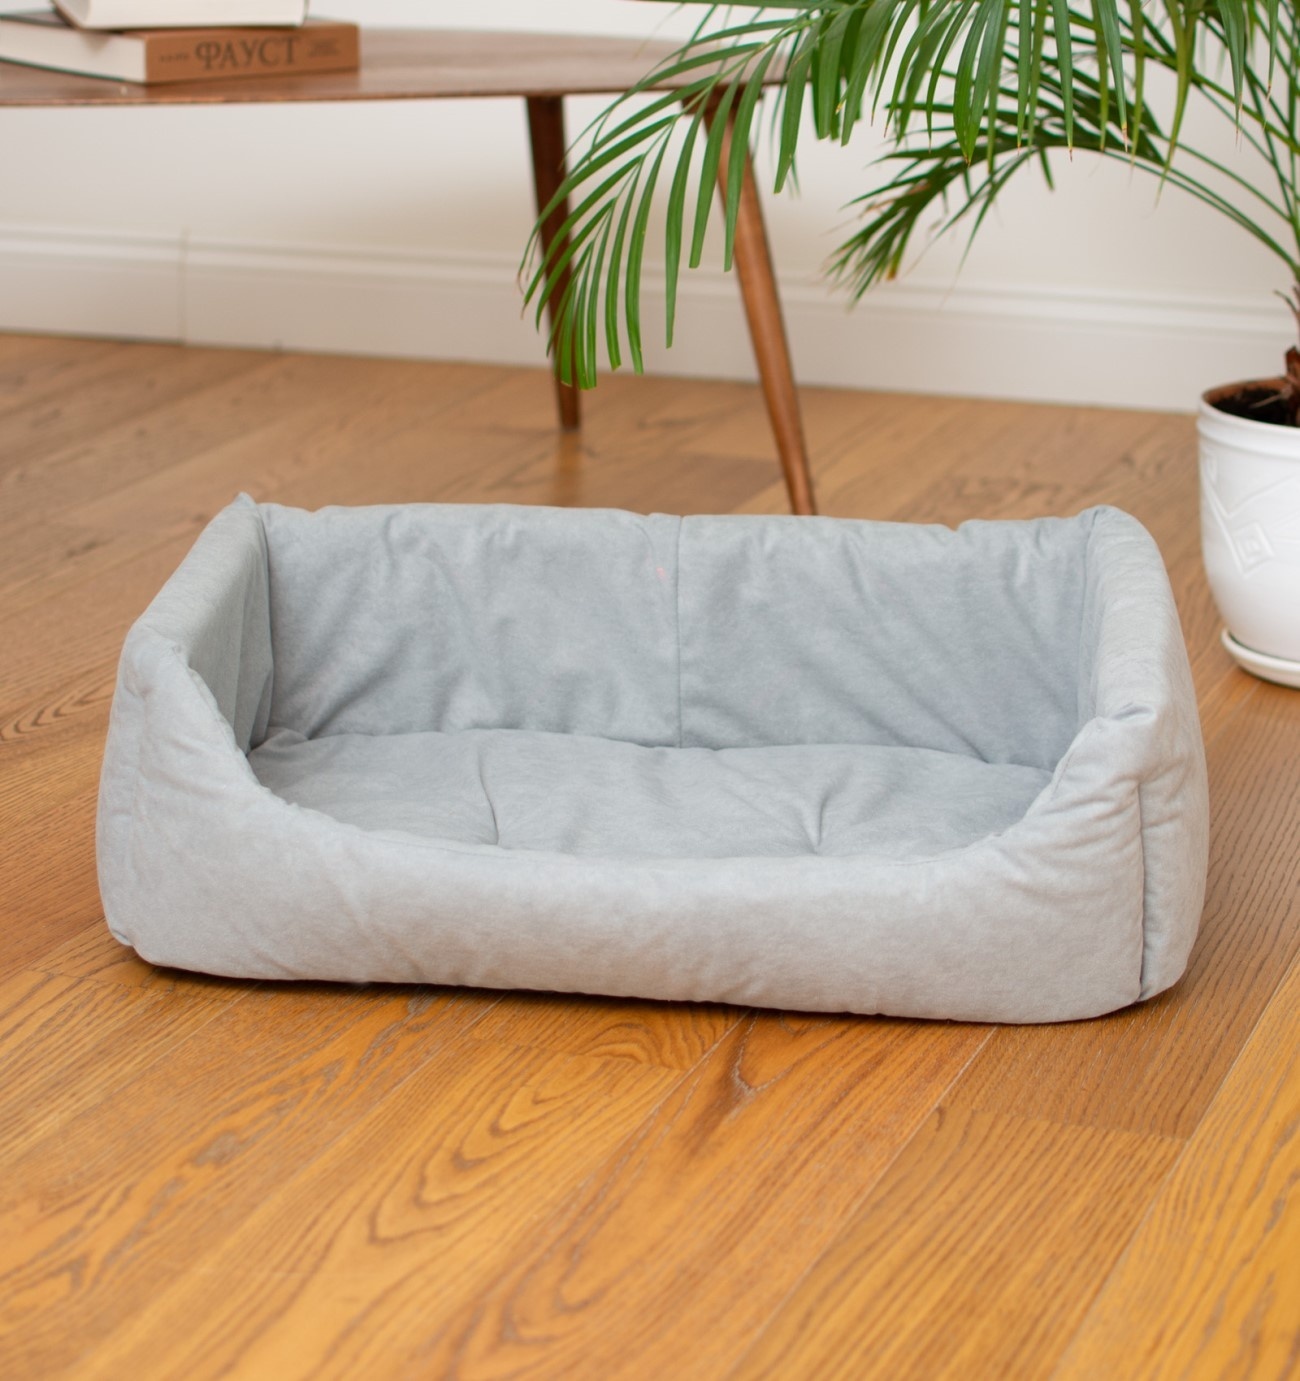 PETSHOP лежаки PETSHOP лежаки лежак прямоугольный с подушкой, серый (51х35х17 см)